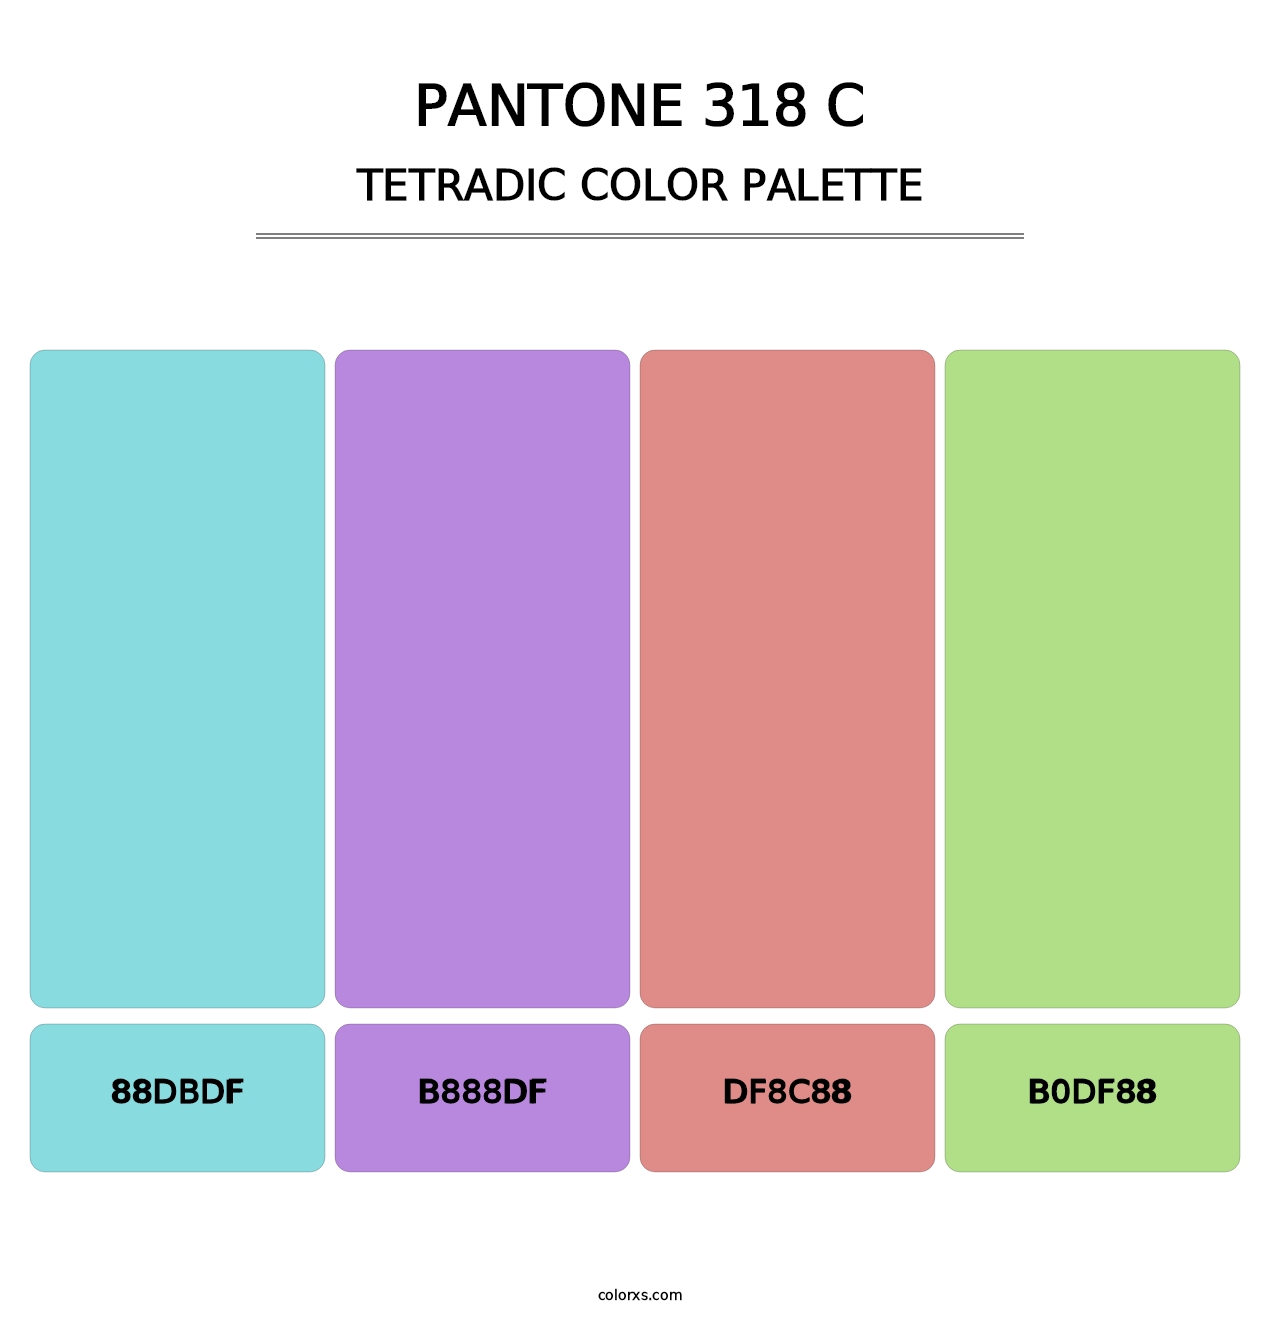 PANTONE 318 C - Tetradic Color Palette